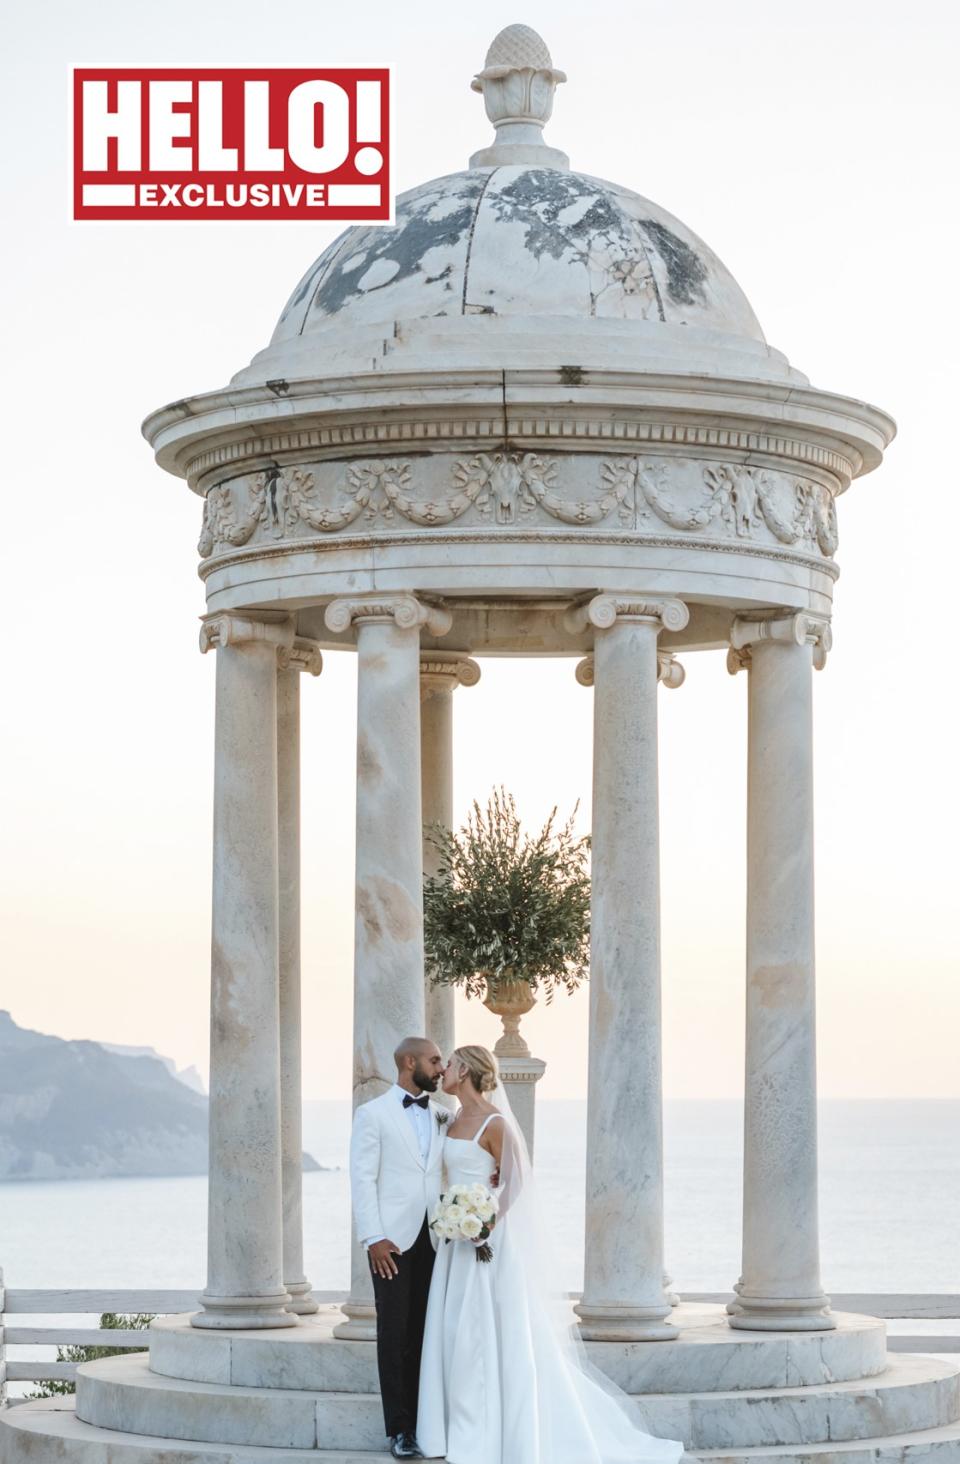 Alex Beresford has married his fiance Imogen McKay in Majorca (Hello! magazine)